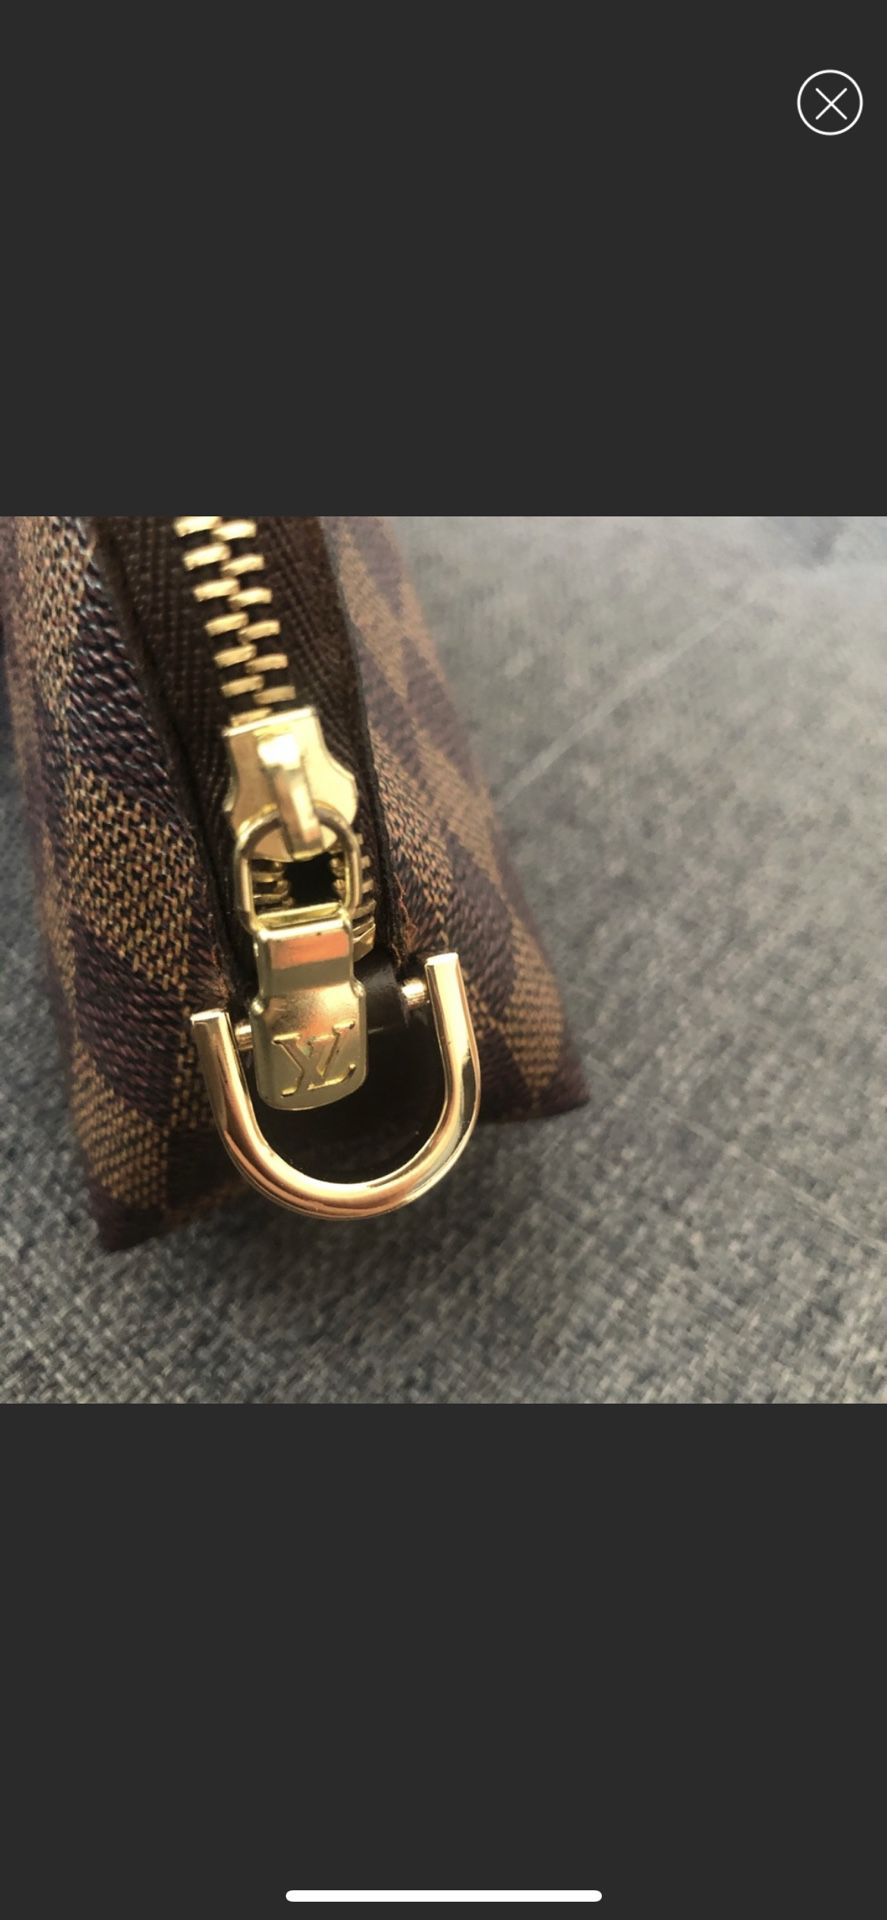 Authentic Louis Vuitton cosmetic bag pochette damier Ebene With Chain 